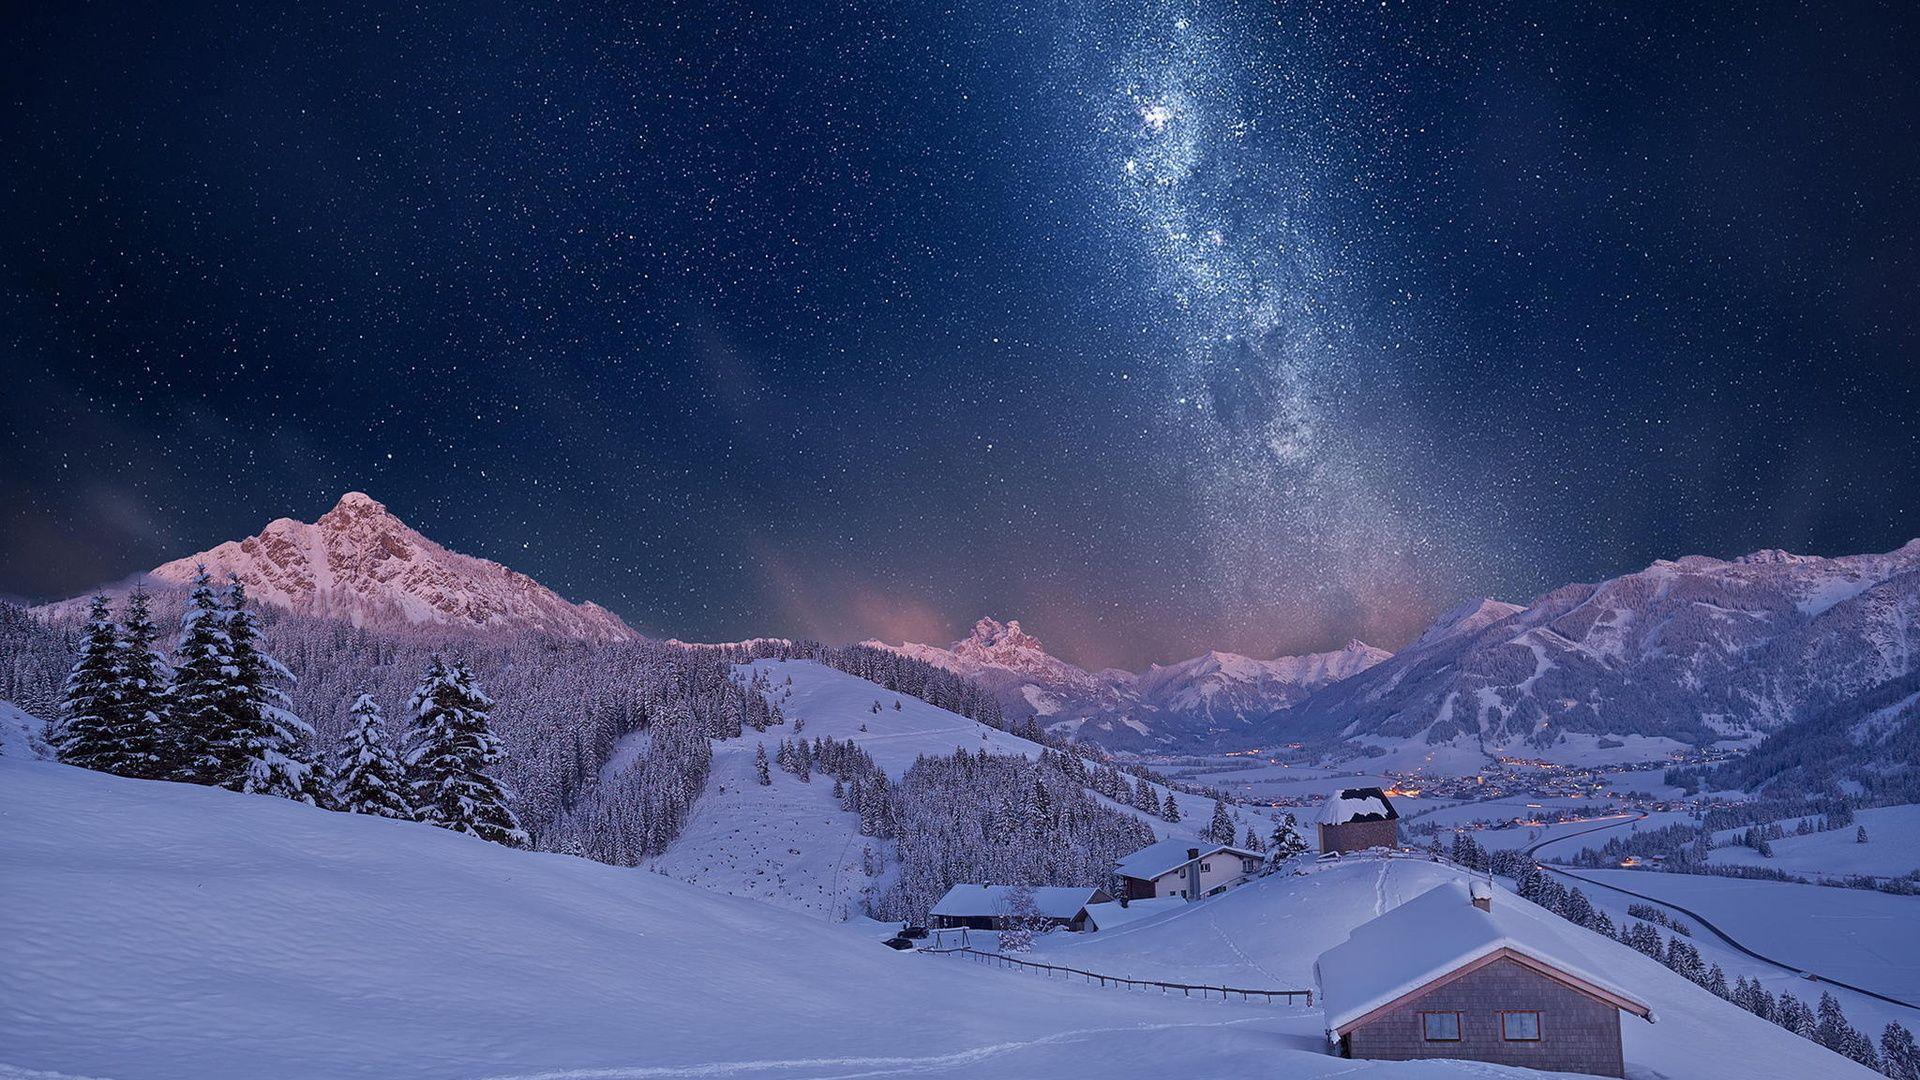 Cold winter nightSky full with stars  Wonderful landscape Beautiful  Nature Landscapes Desktop Wallpapers Awsome Landscape Wall  Идеи  озеленения Пейзажи Обои